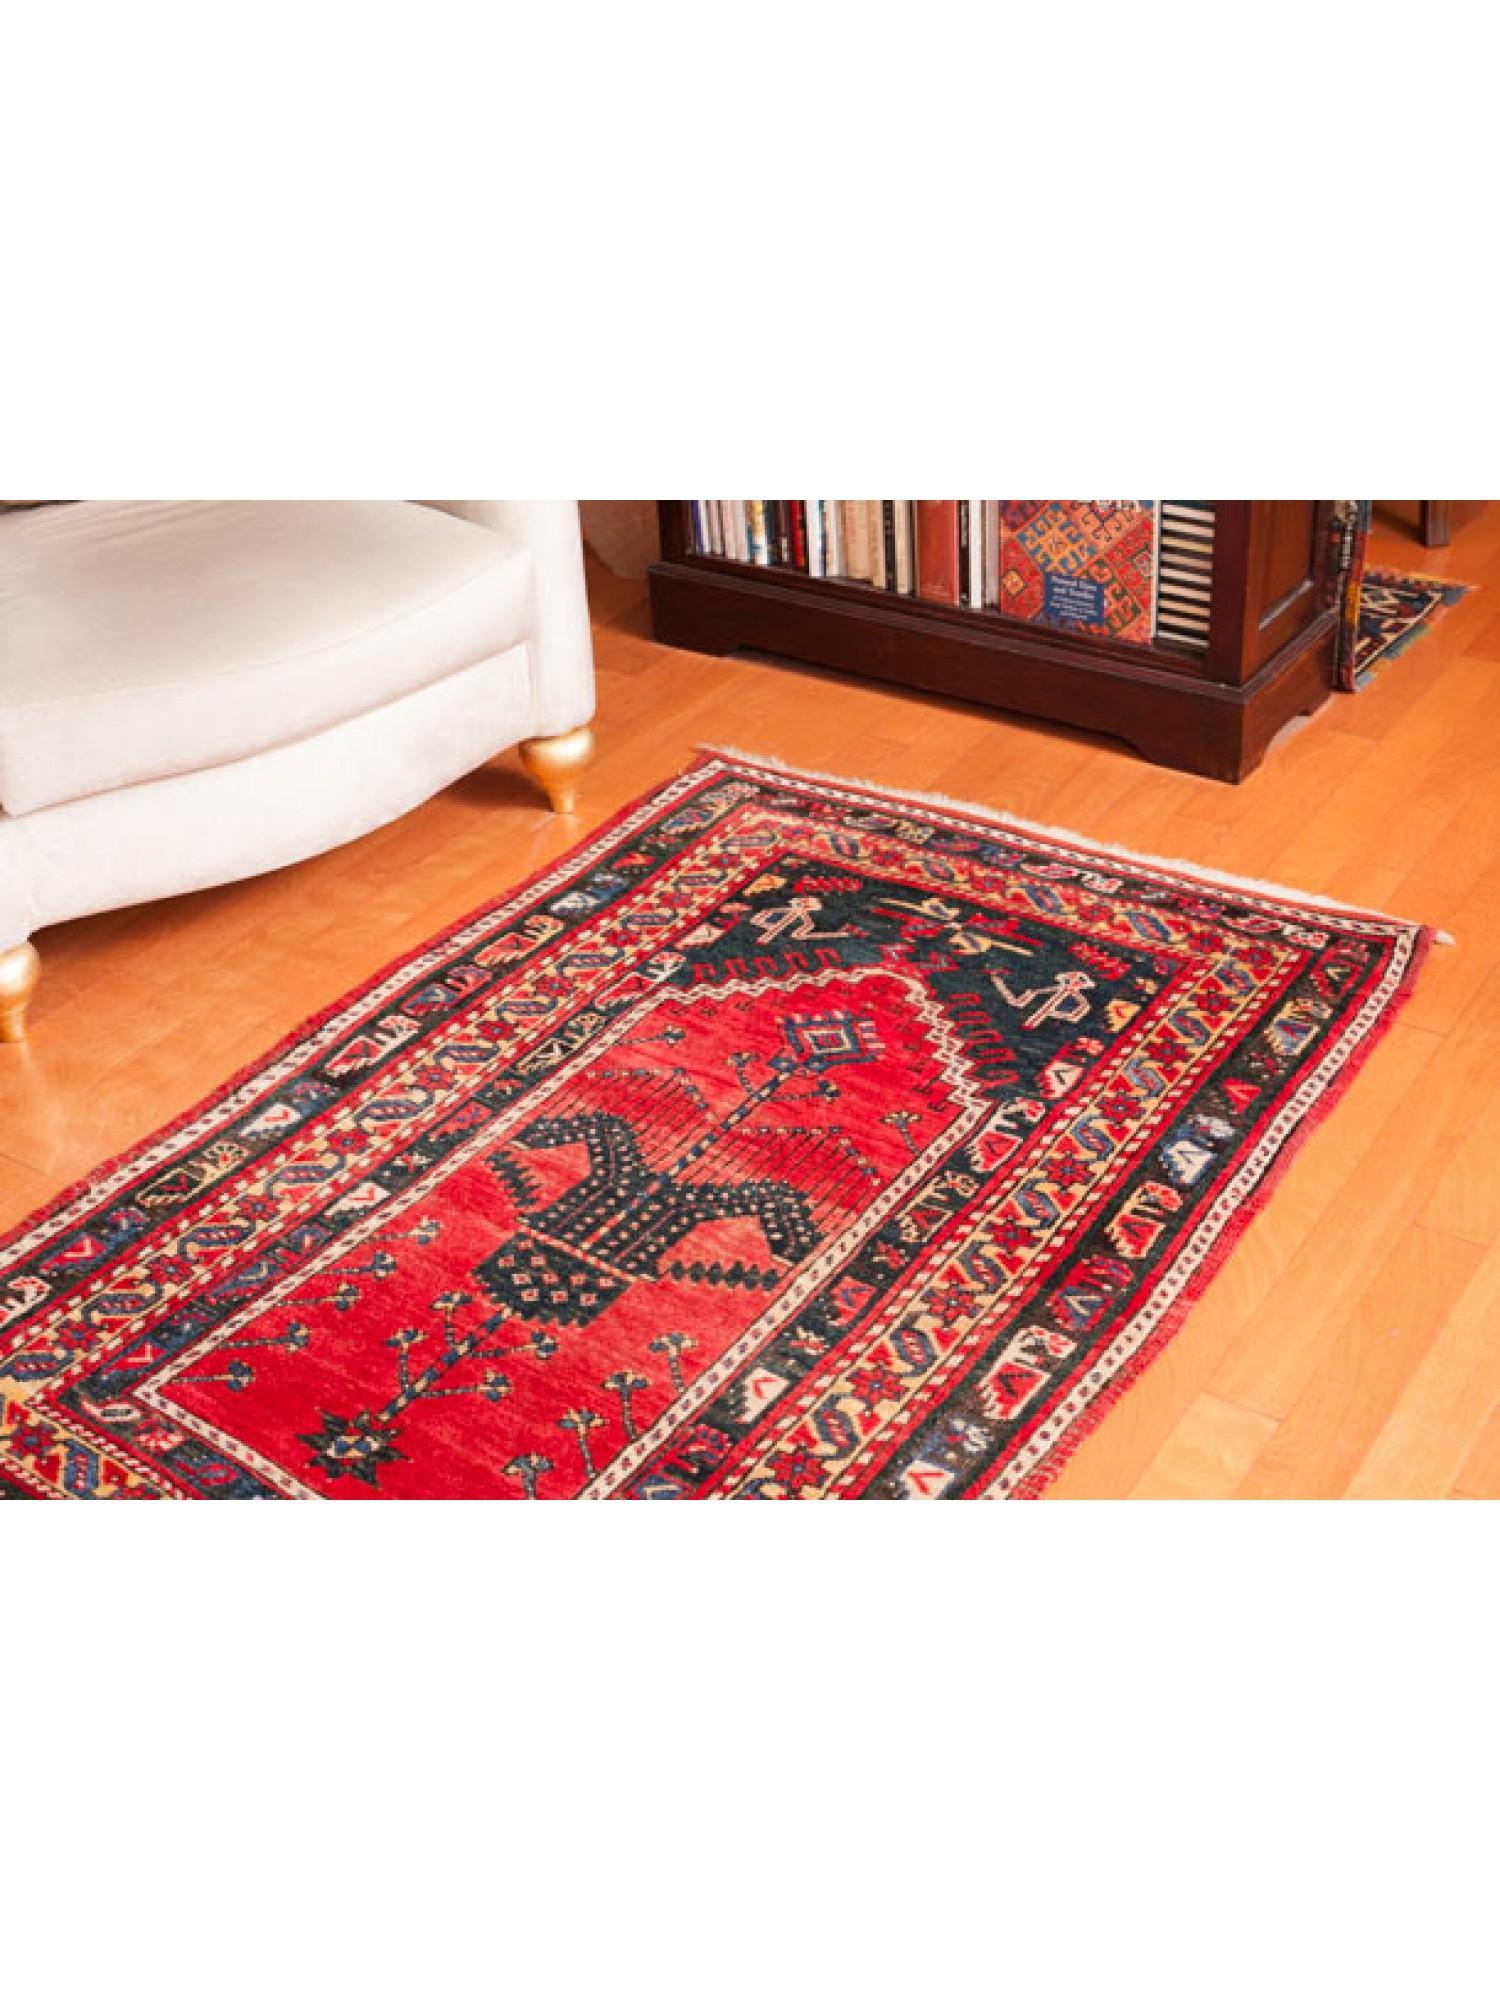 20th Century Antique Ghiordes Prayer Rug Western Anatolian Turkish Mihrab Carpet Rare Design For Sale